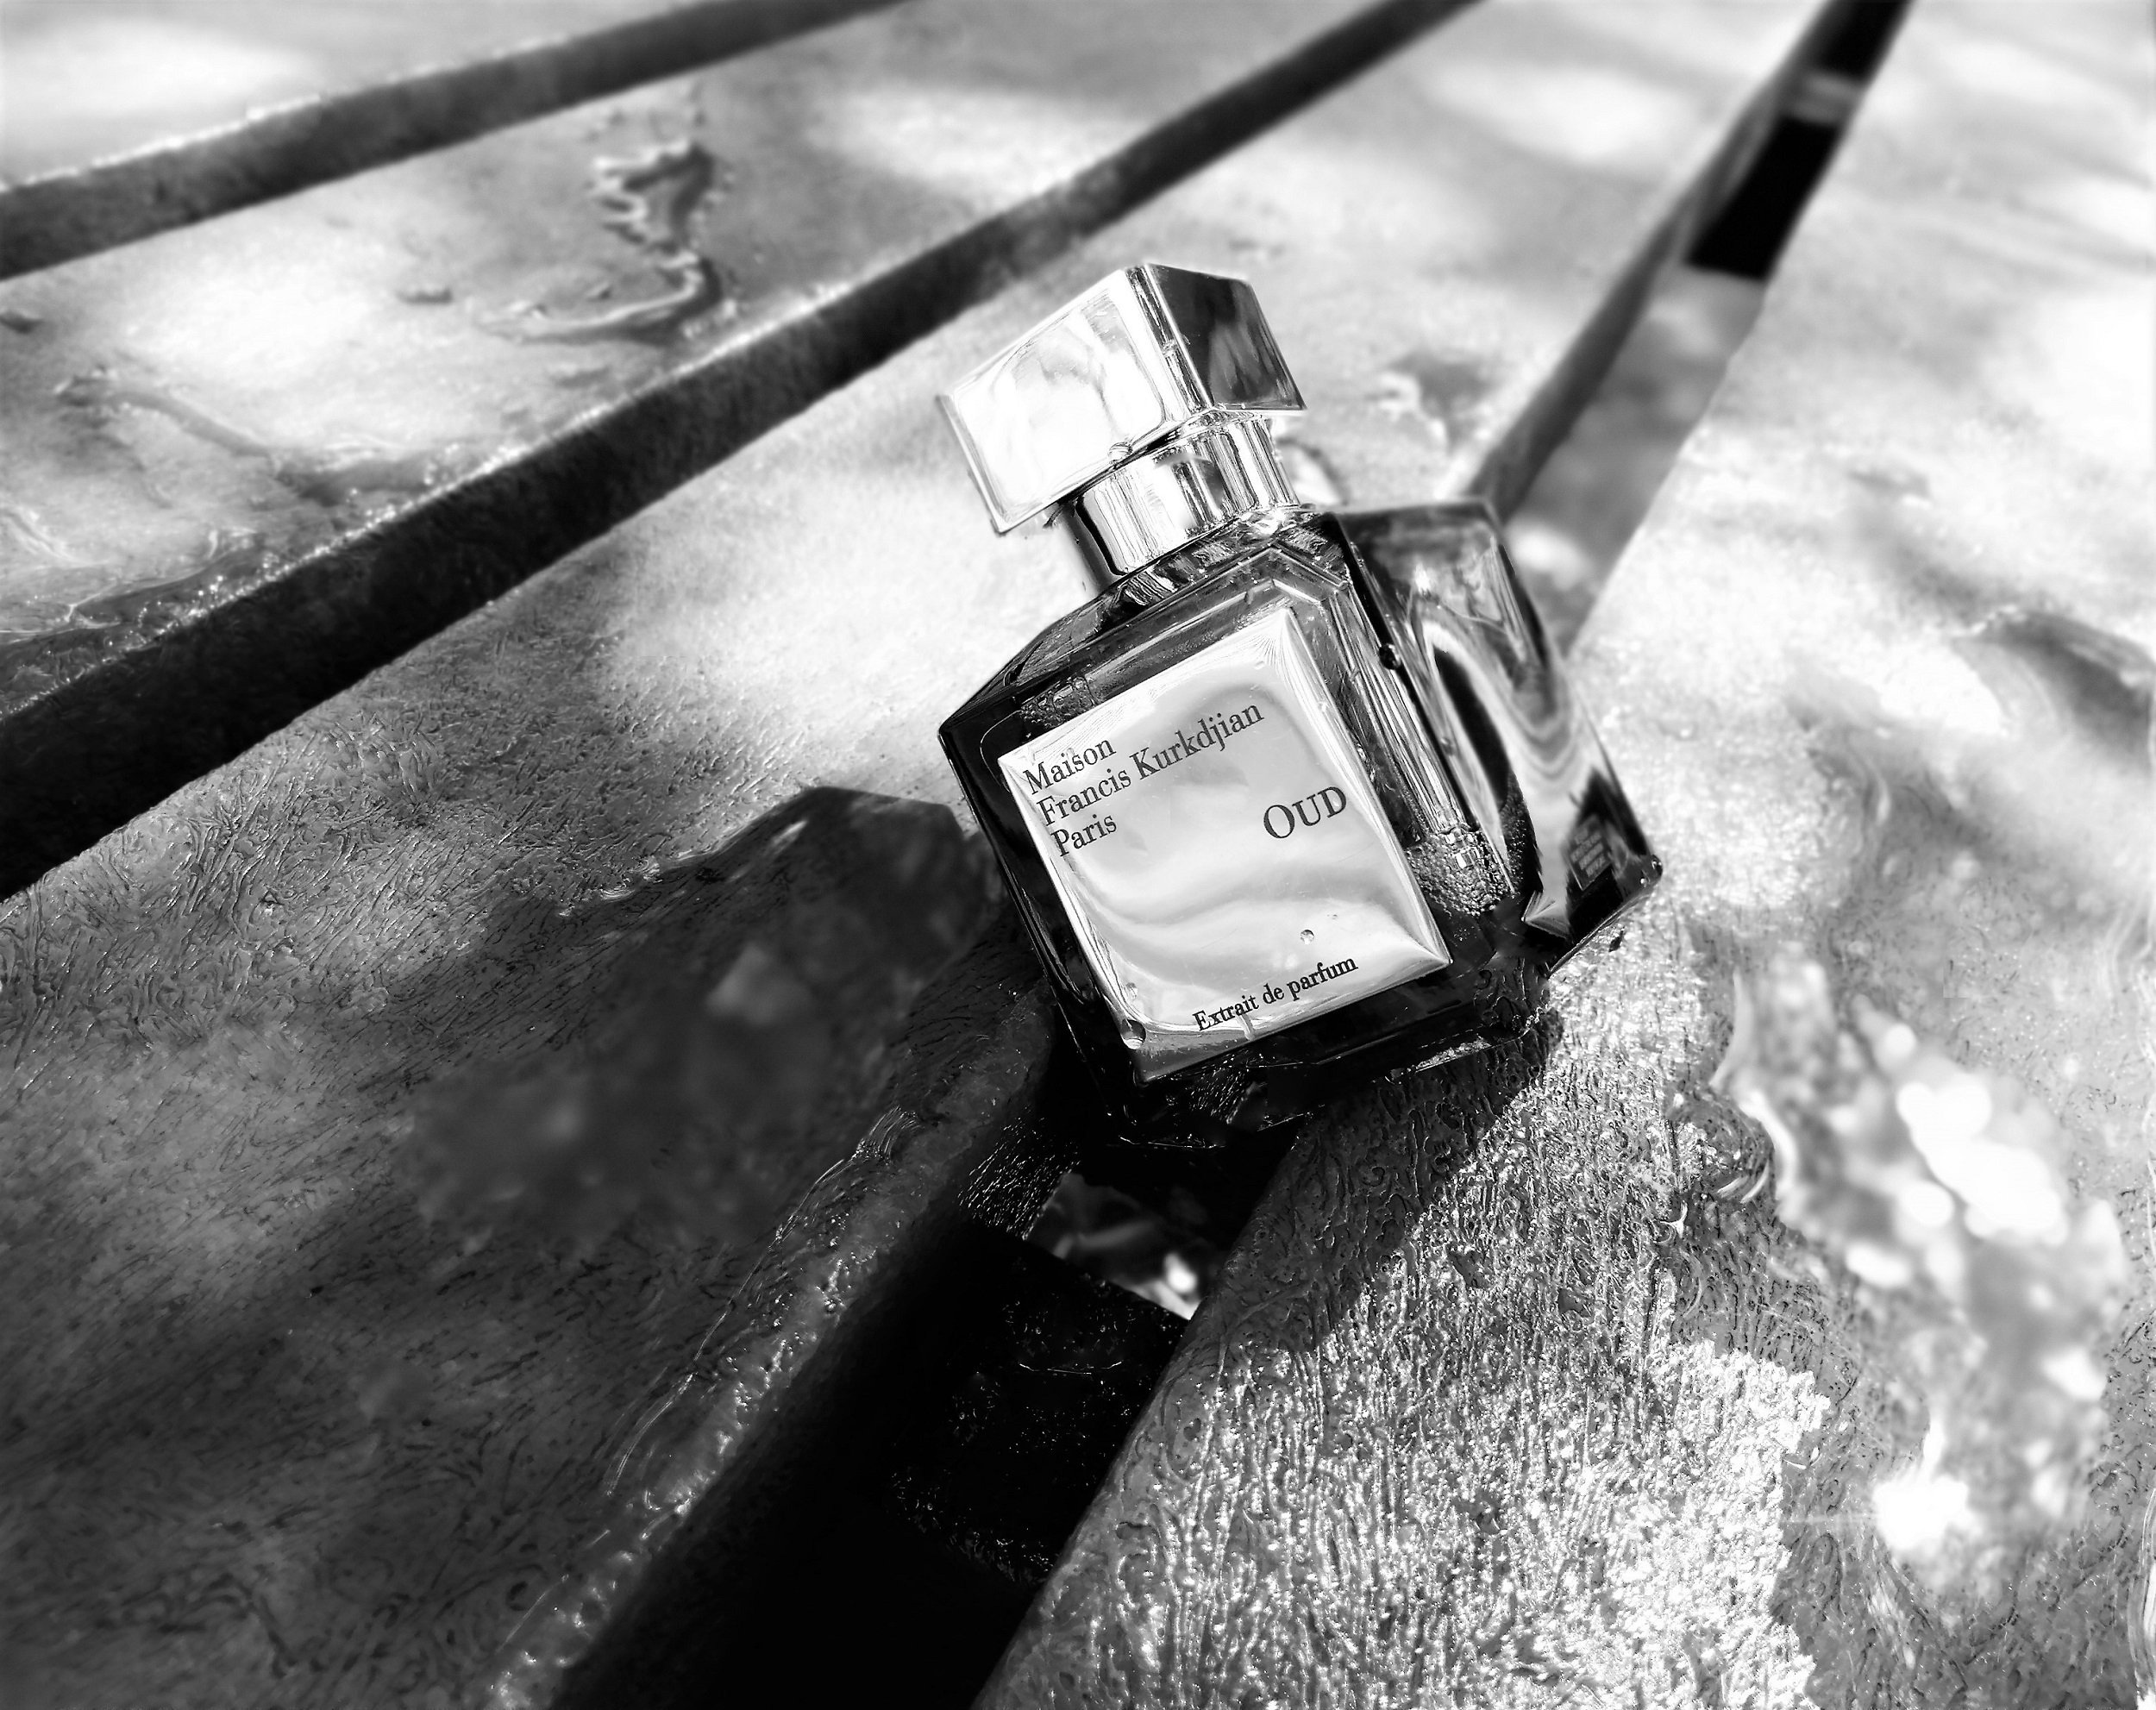 Maison Francis Kurkdjian 6.8 oz. Oud Eau de Parfum